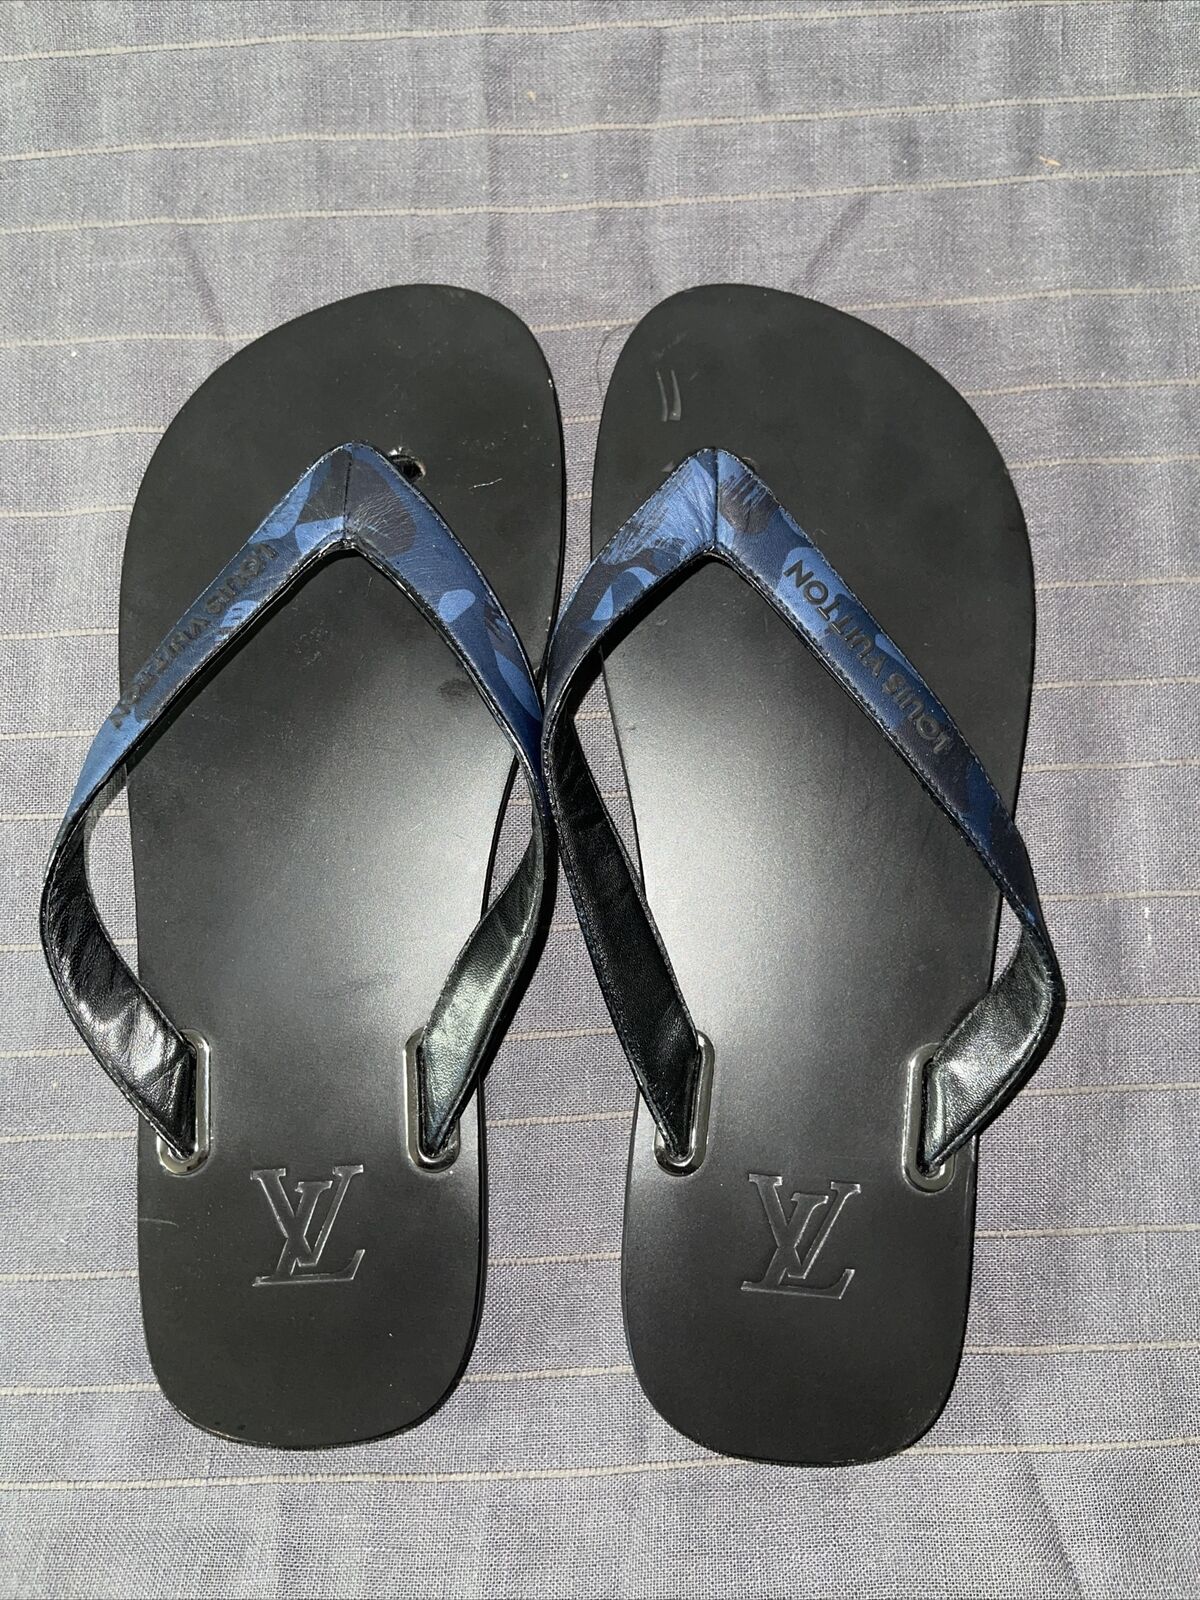 Pre-Owned Authentic Louis Vuitton Zigzag Silver Blue Sneaker Size 9US